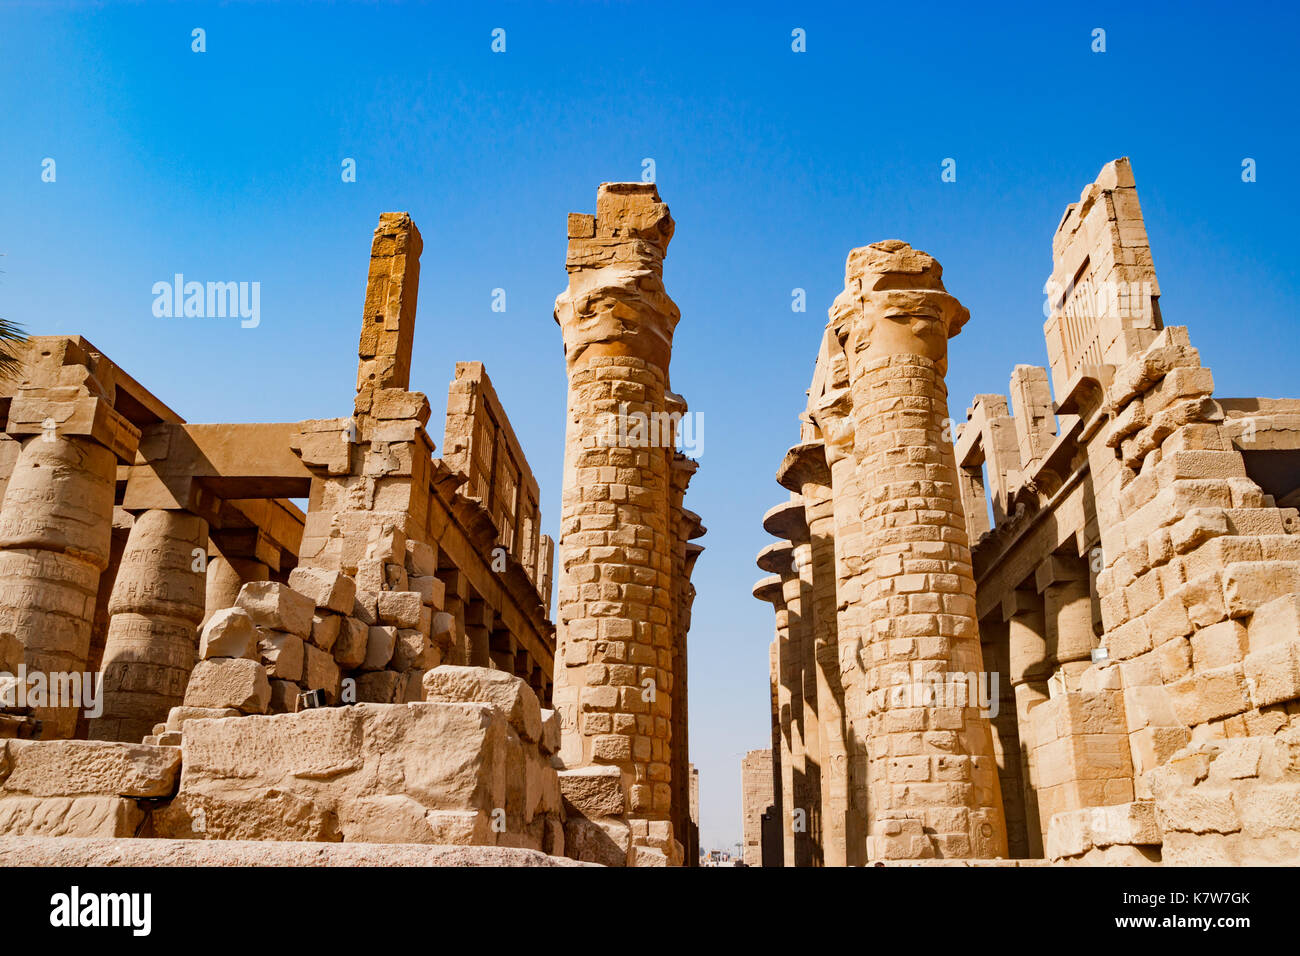 Columnas de jeroglíficos egipcios en Luxor, Egipto Foto de stock